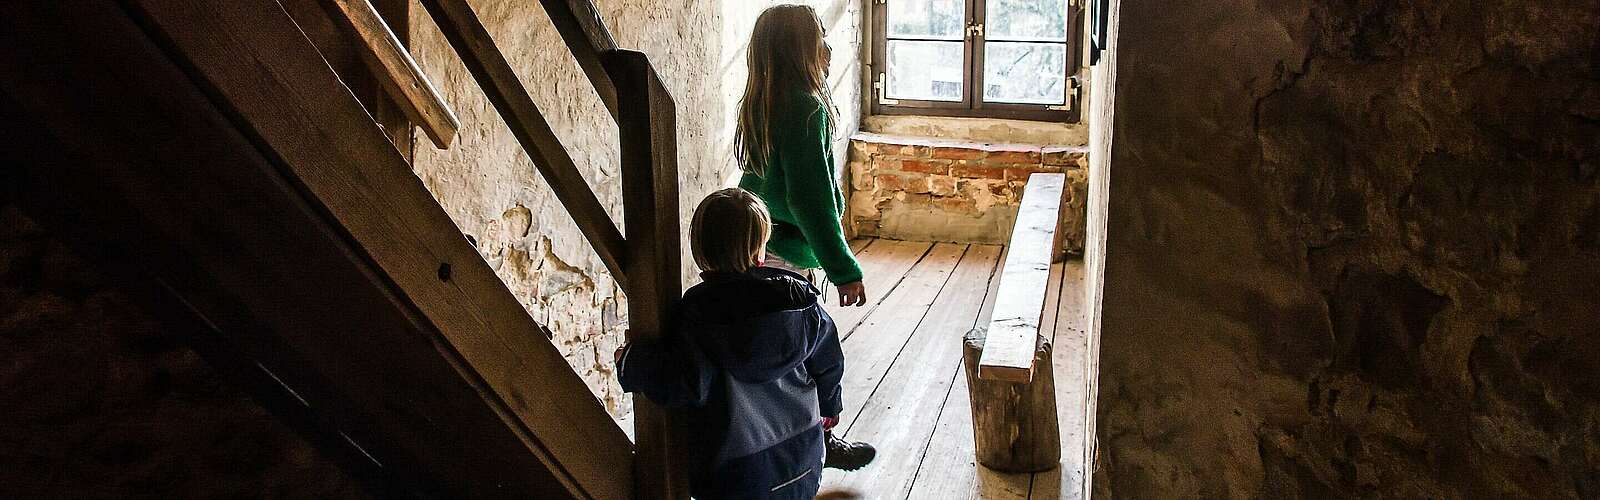 Kinder auf Burg Rabenstein,
        
    

        Foto: Fotograf / Lizenz - Media Import/Geertje Jacob